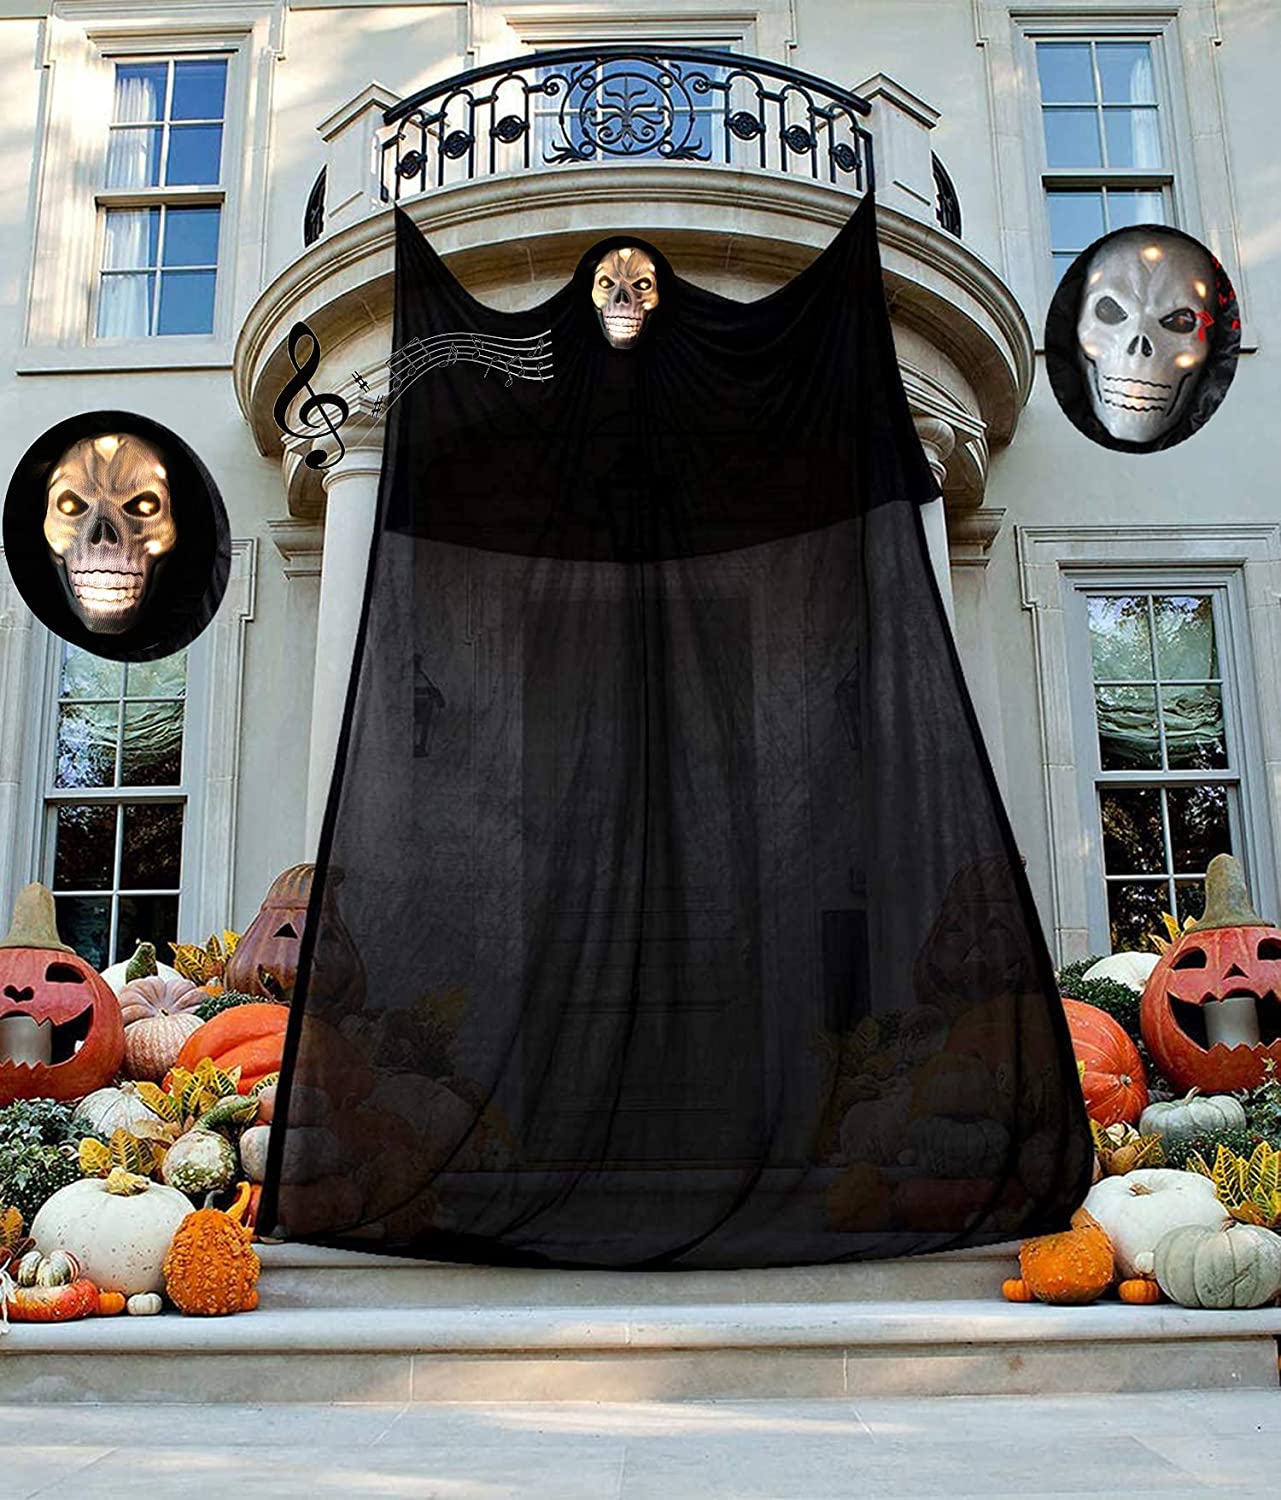 HAPPIWIZ 11 FT Halloween Ghost Hanging Decorations